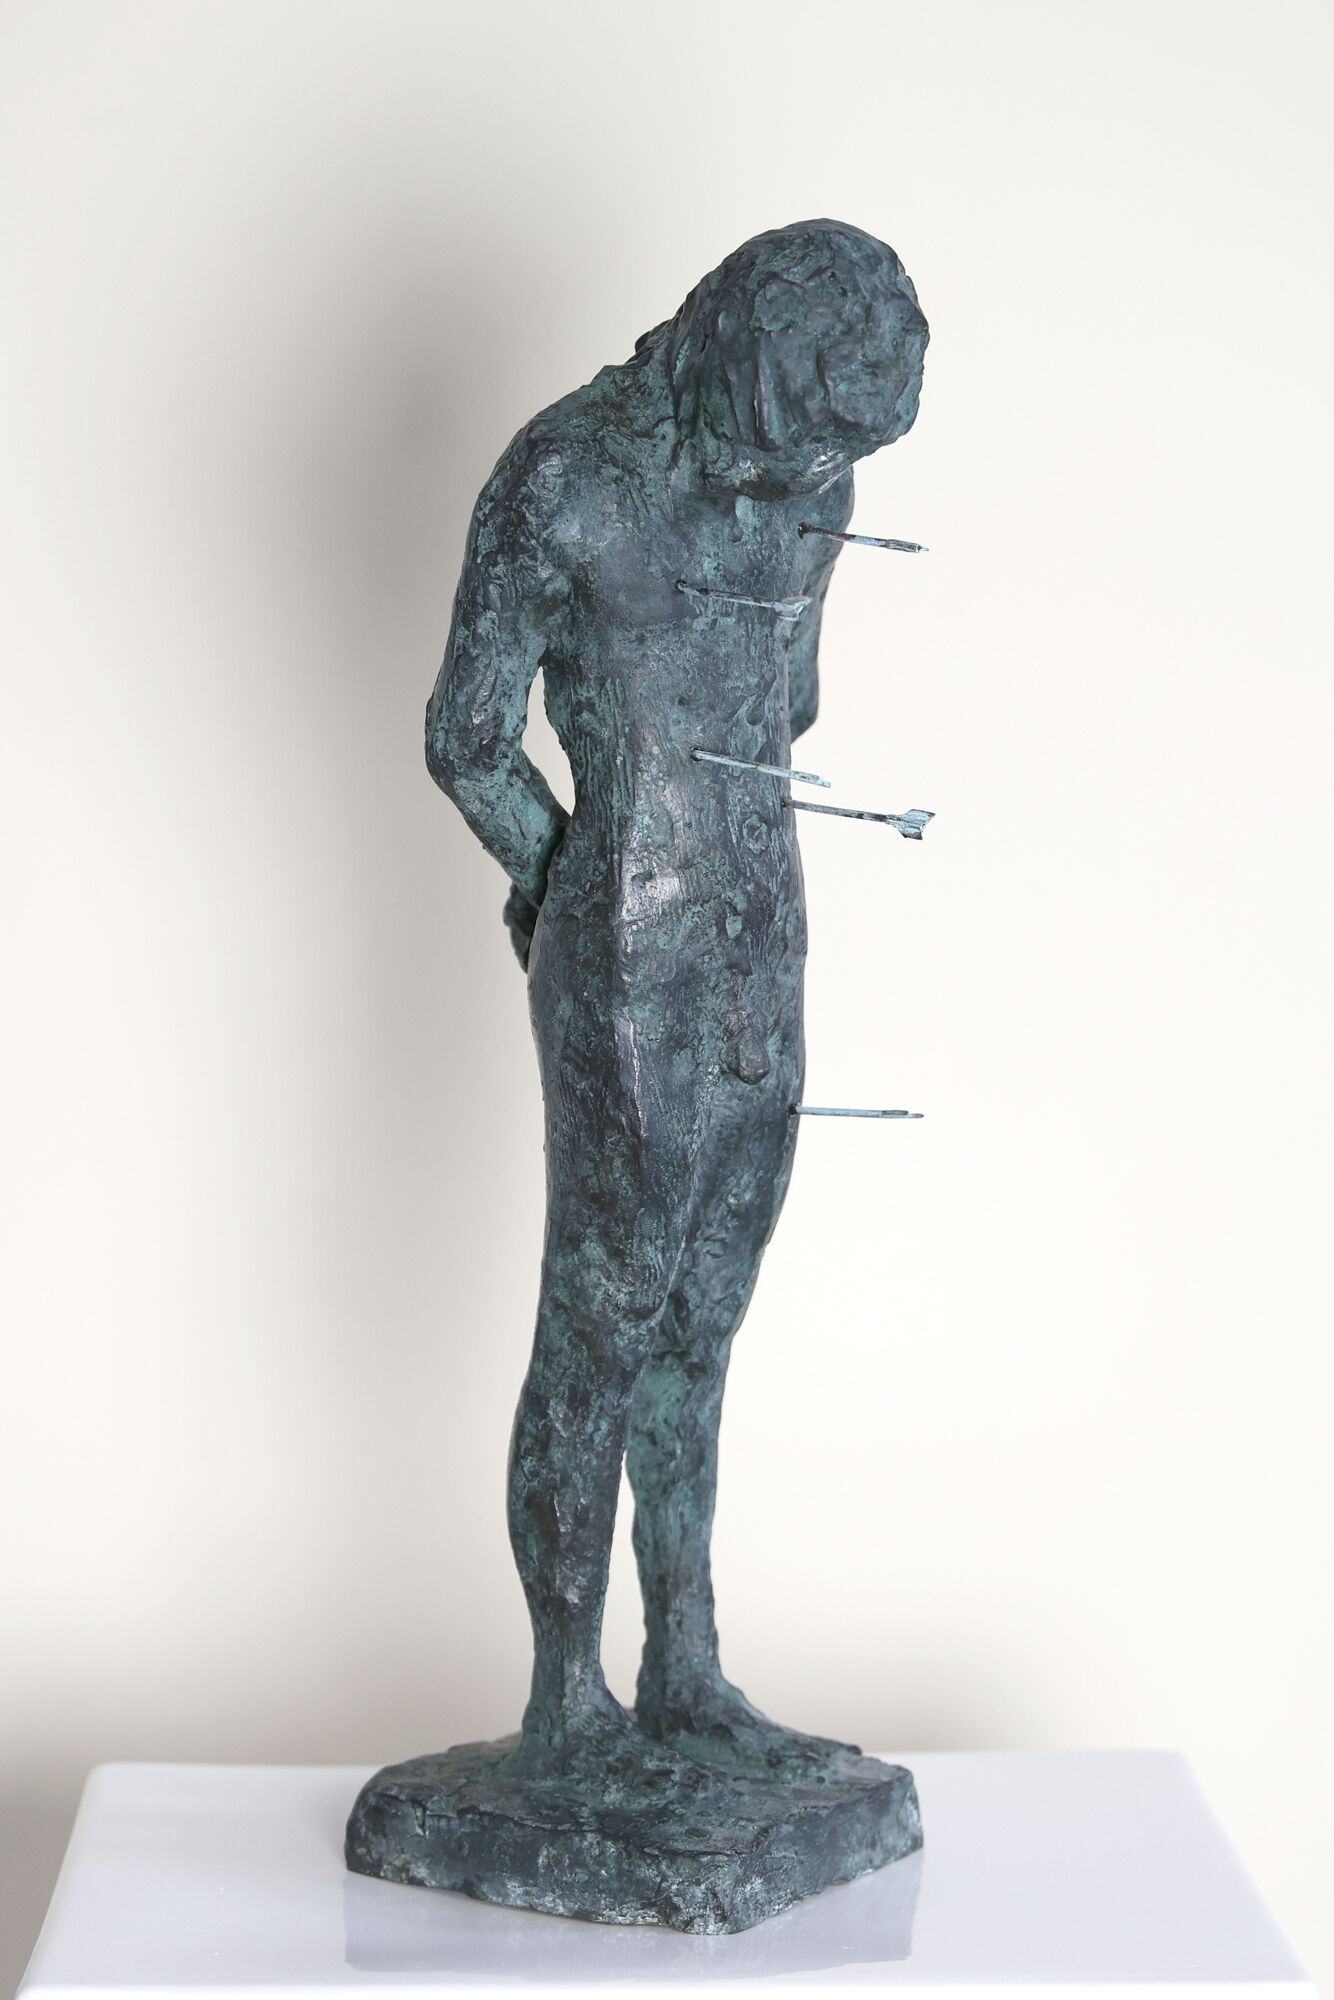 Sculpture "Sebastian" (2023) by Thomas Jastram